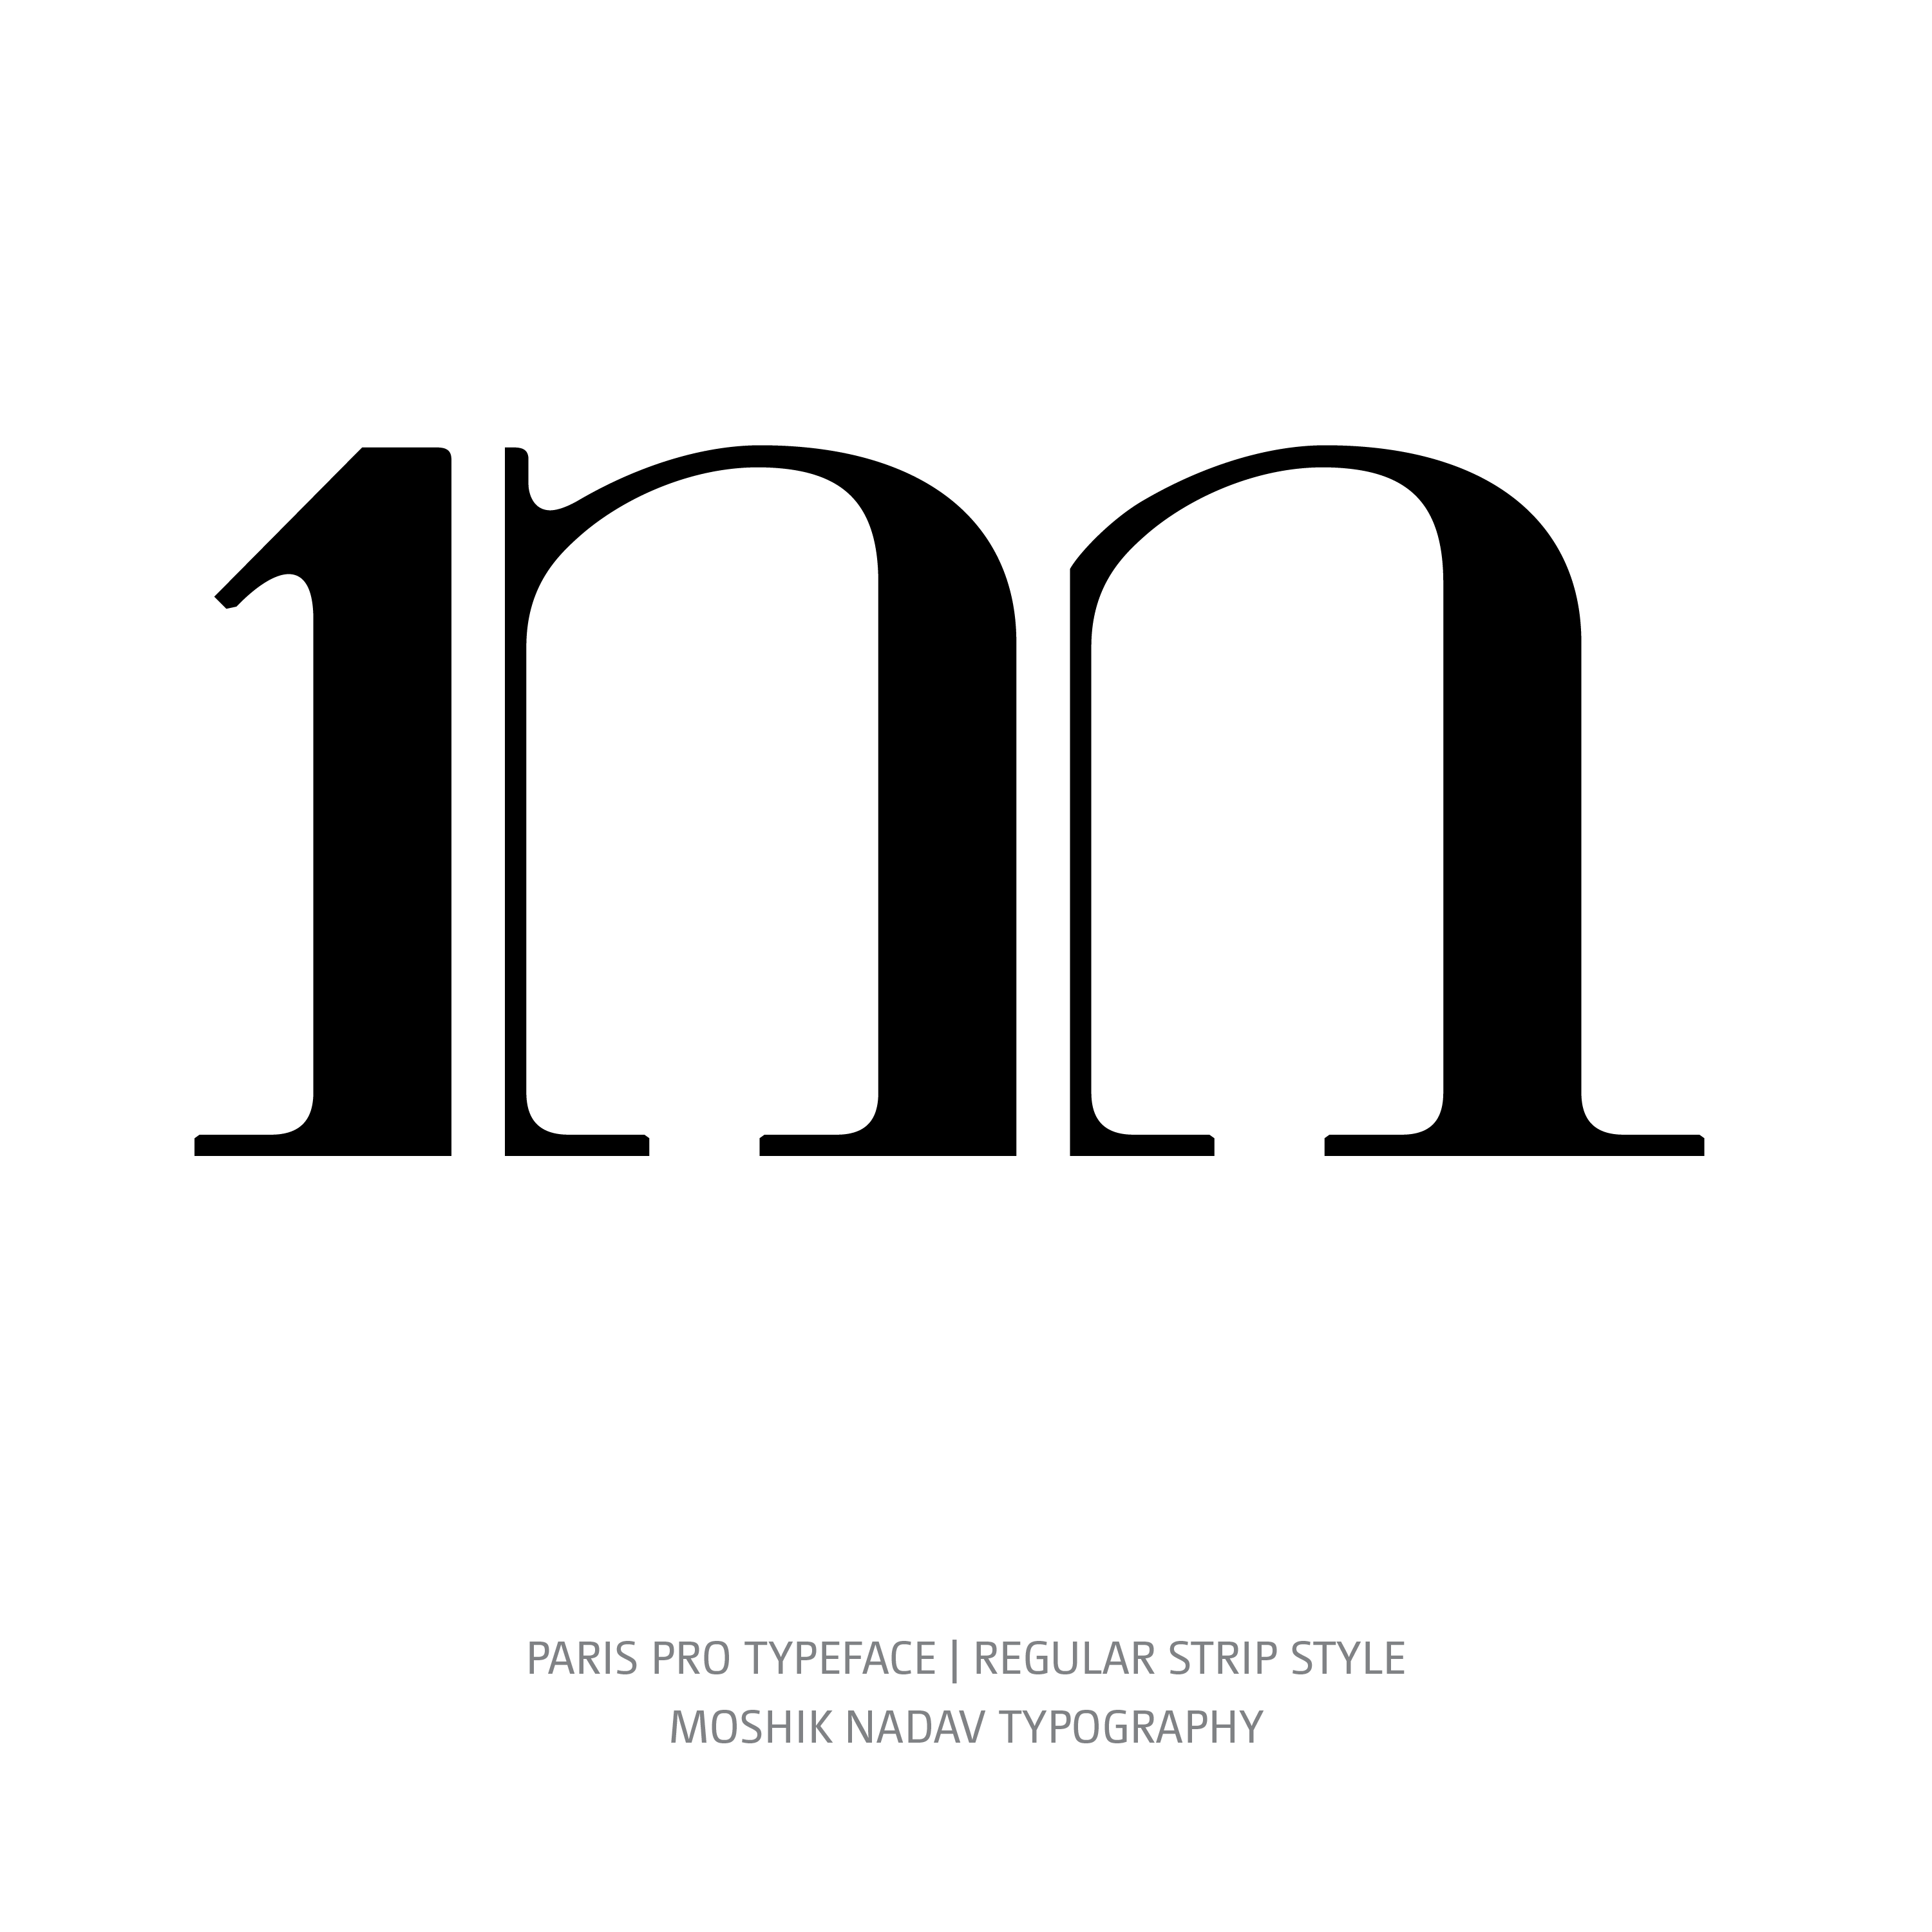 Paris Pro Typeface Regular Strip m